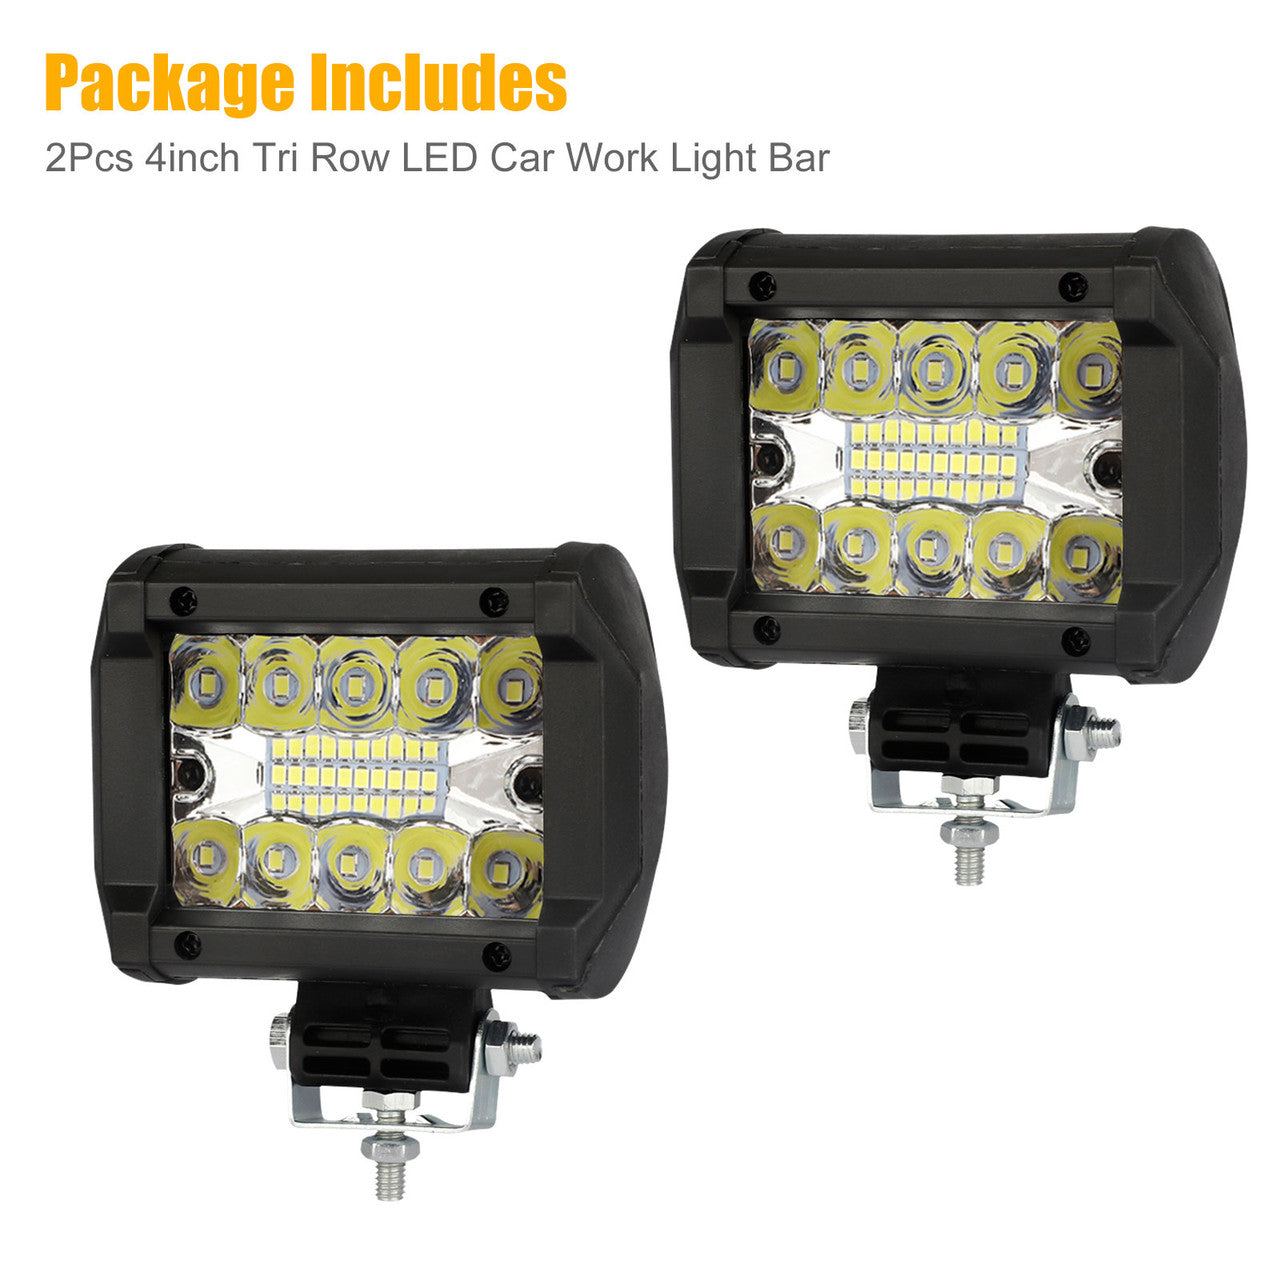 Tri-Row LED Work Light Bar for Truck, ATV, etc, 200W Driving Pods